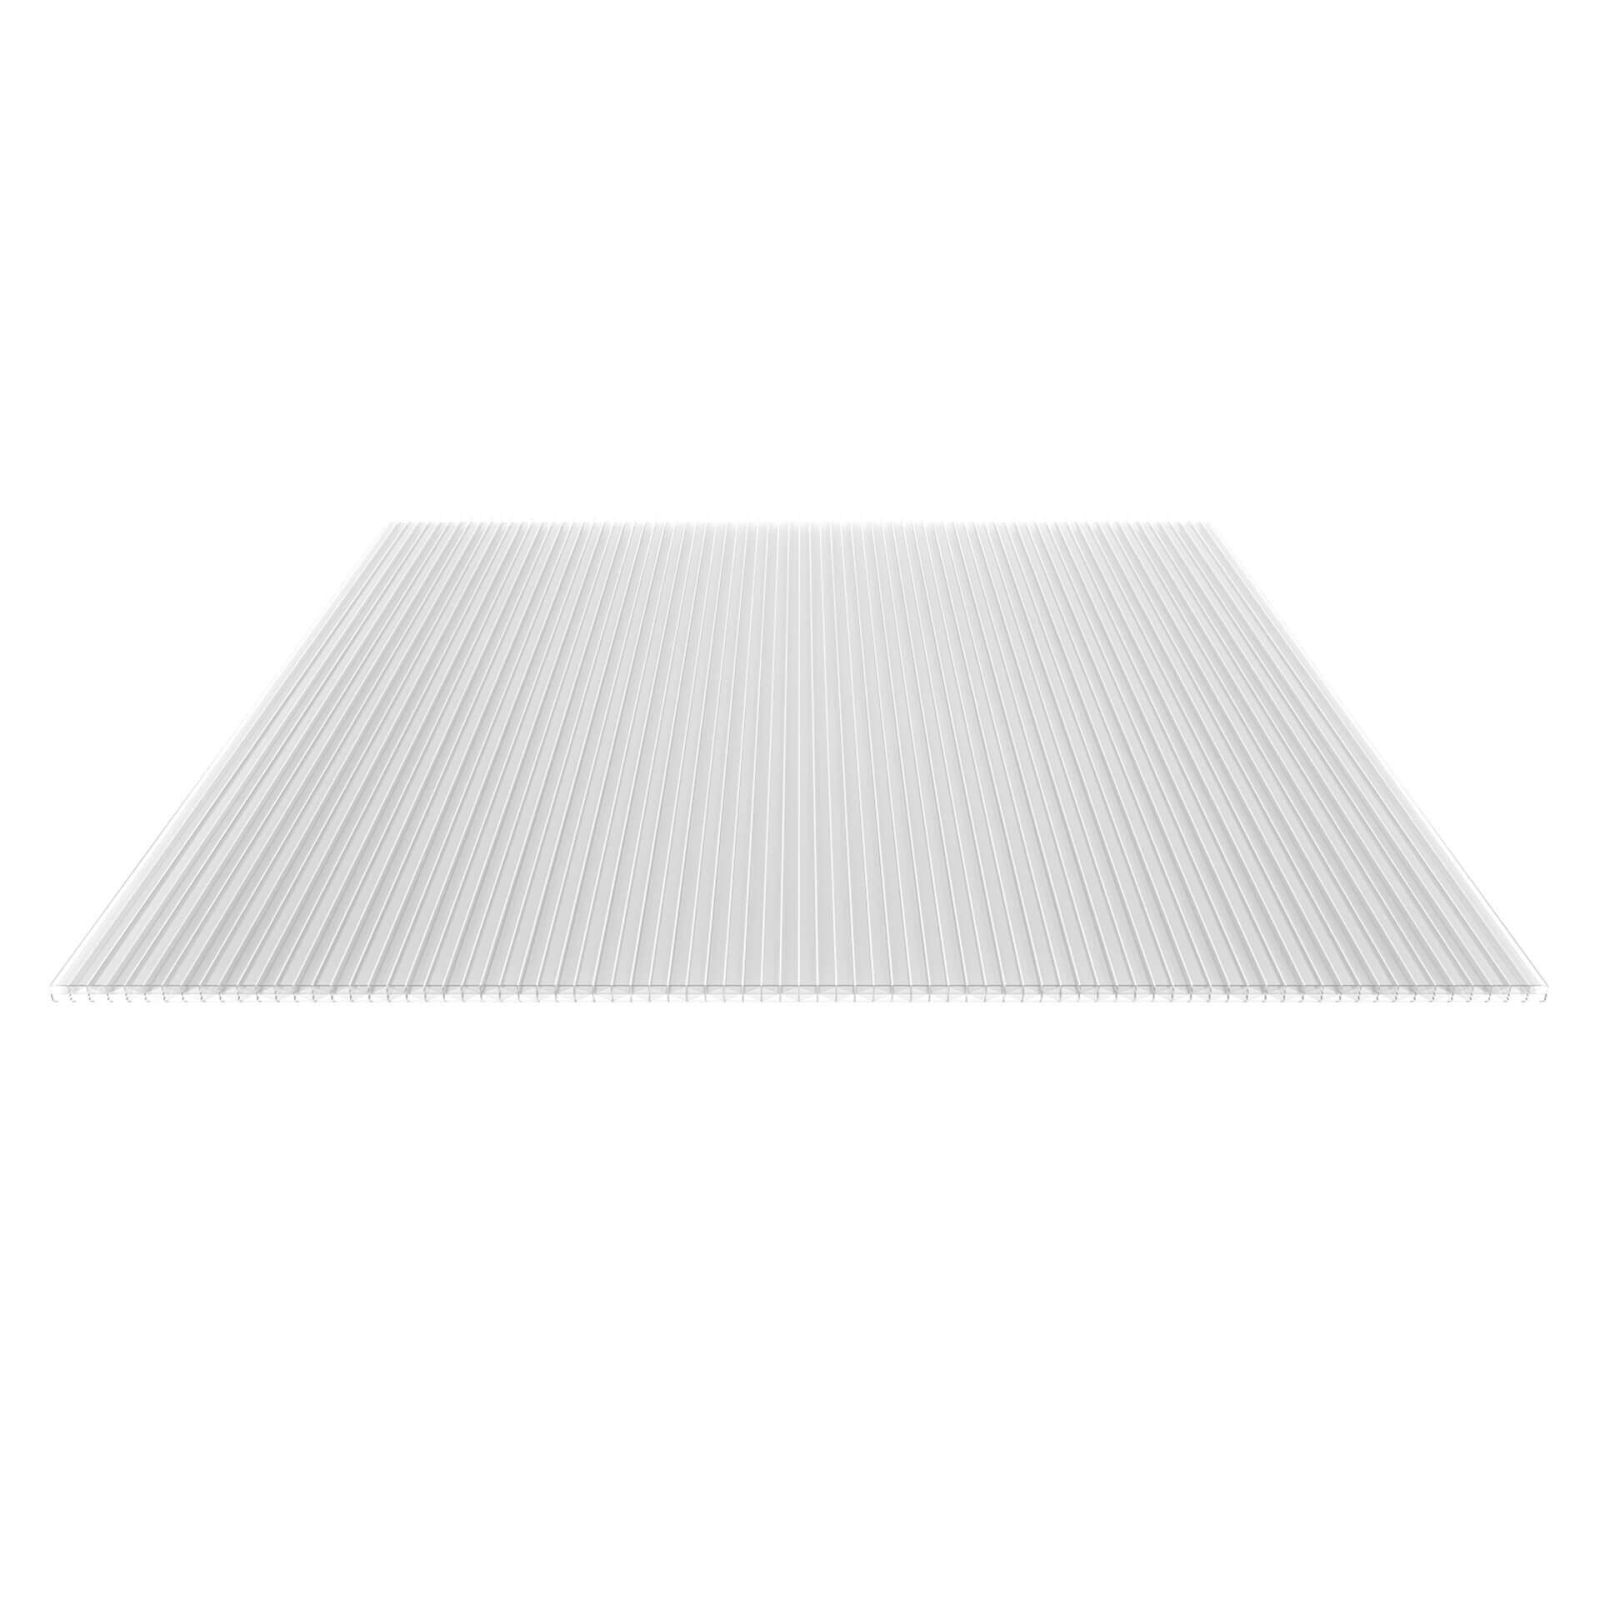 Polycarbonat Stegplatte | 16 mm | Breite 1200 mm | Klar | Extra stark | 500 mm